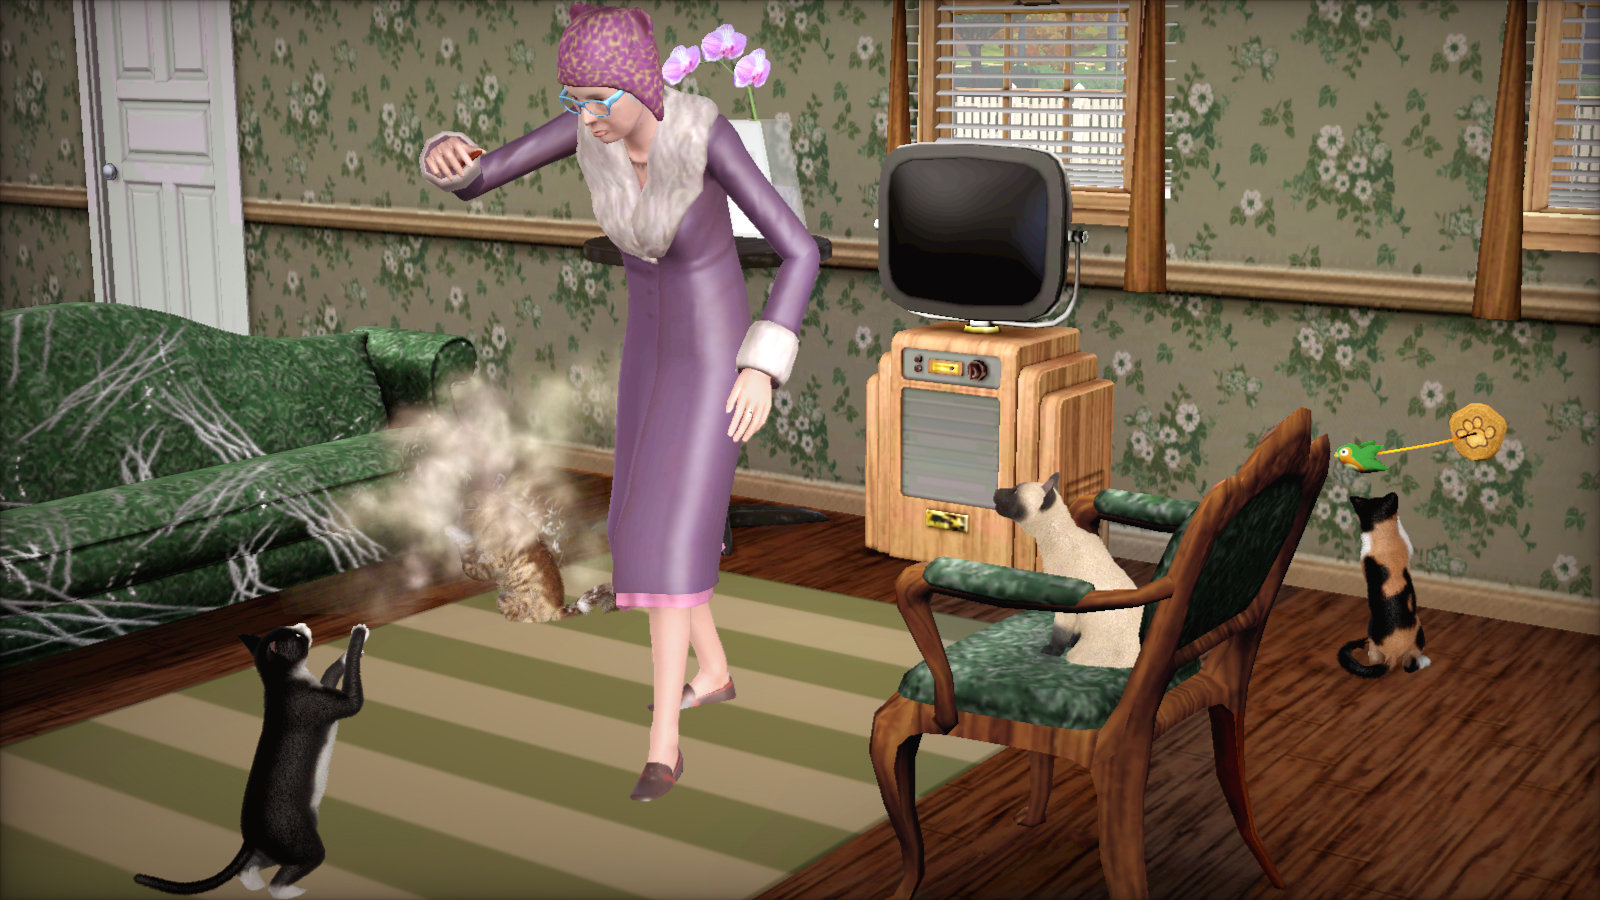 ÎÏÎ¿ÏÎ­Î»ÎµÏÎ¼Î± ÎµÎ¹ÎºÏÎ½Î±Ï Î³Î¹Î± The Sims 3 Pets PS3 USED